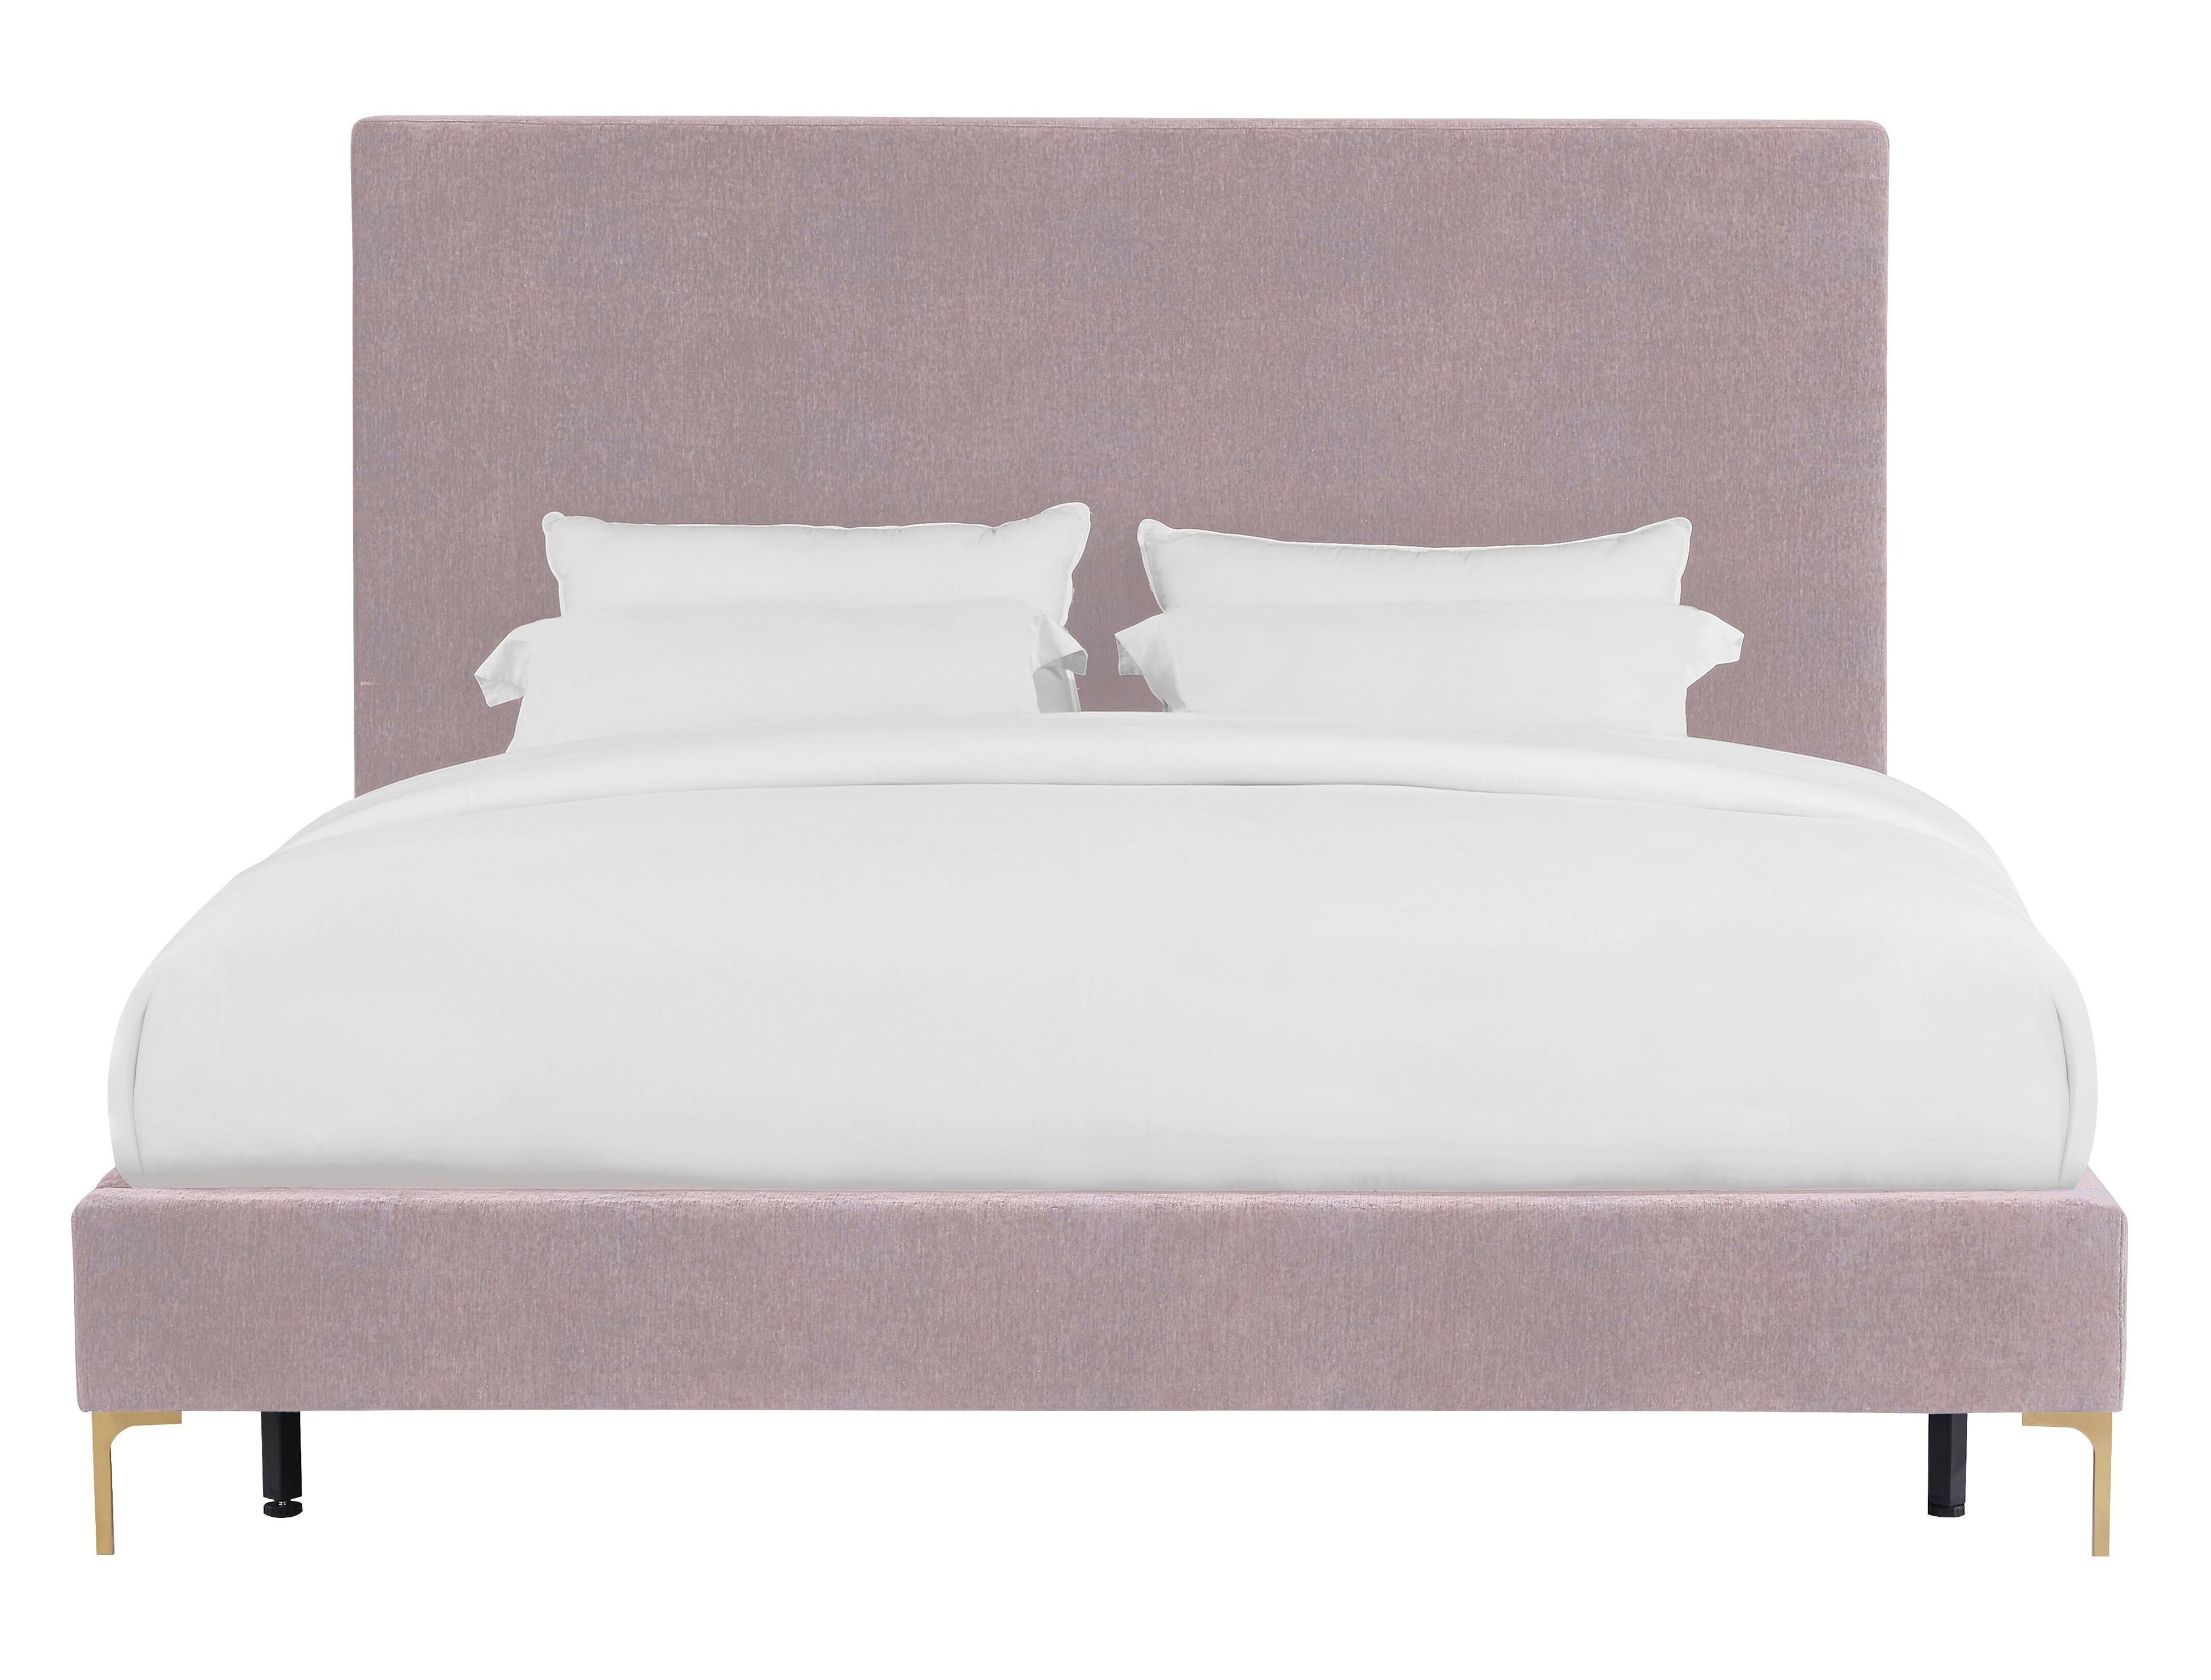 Delilah Blush Textured Velvet Bed in Queen - Image 1